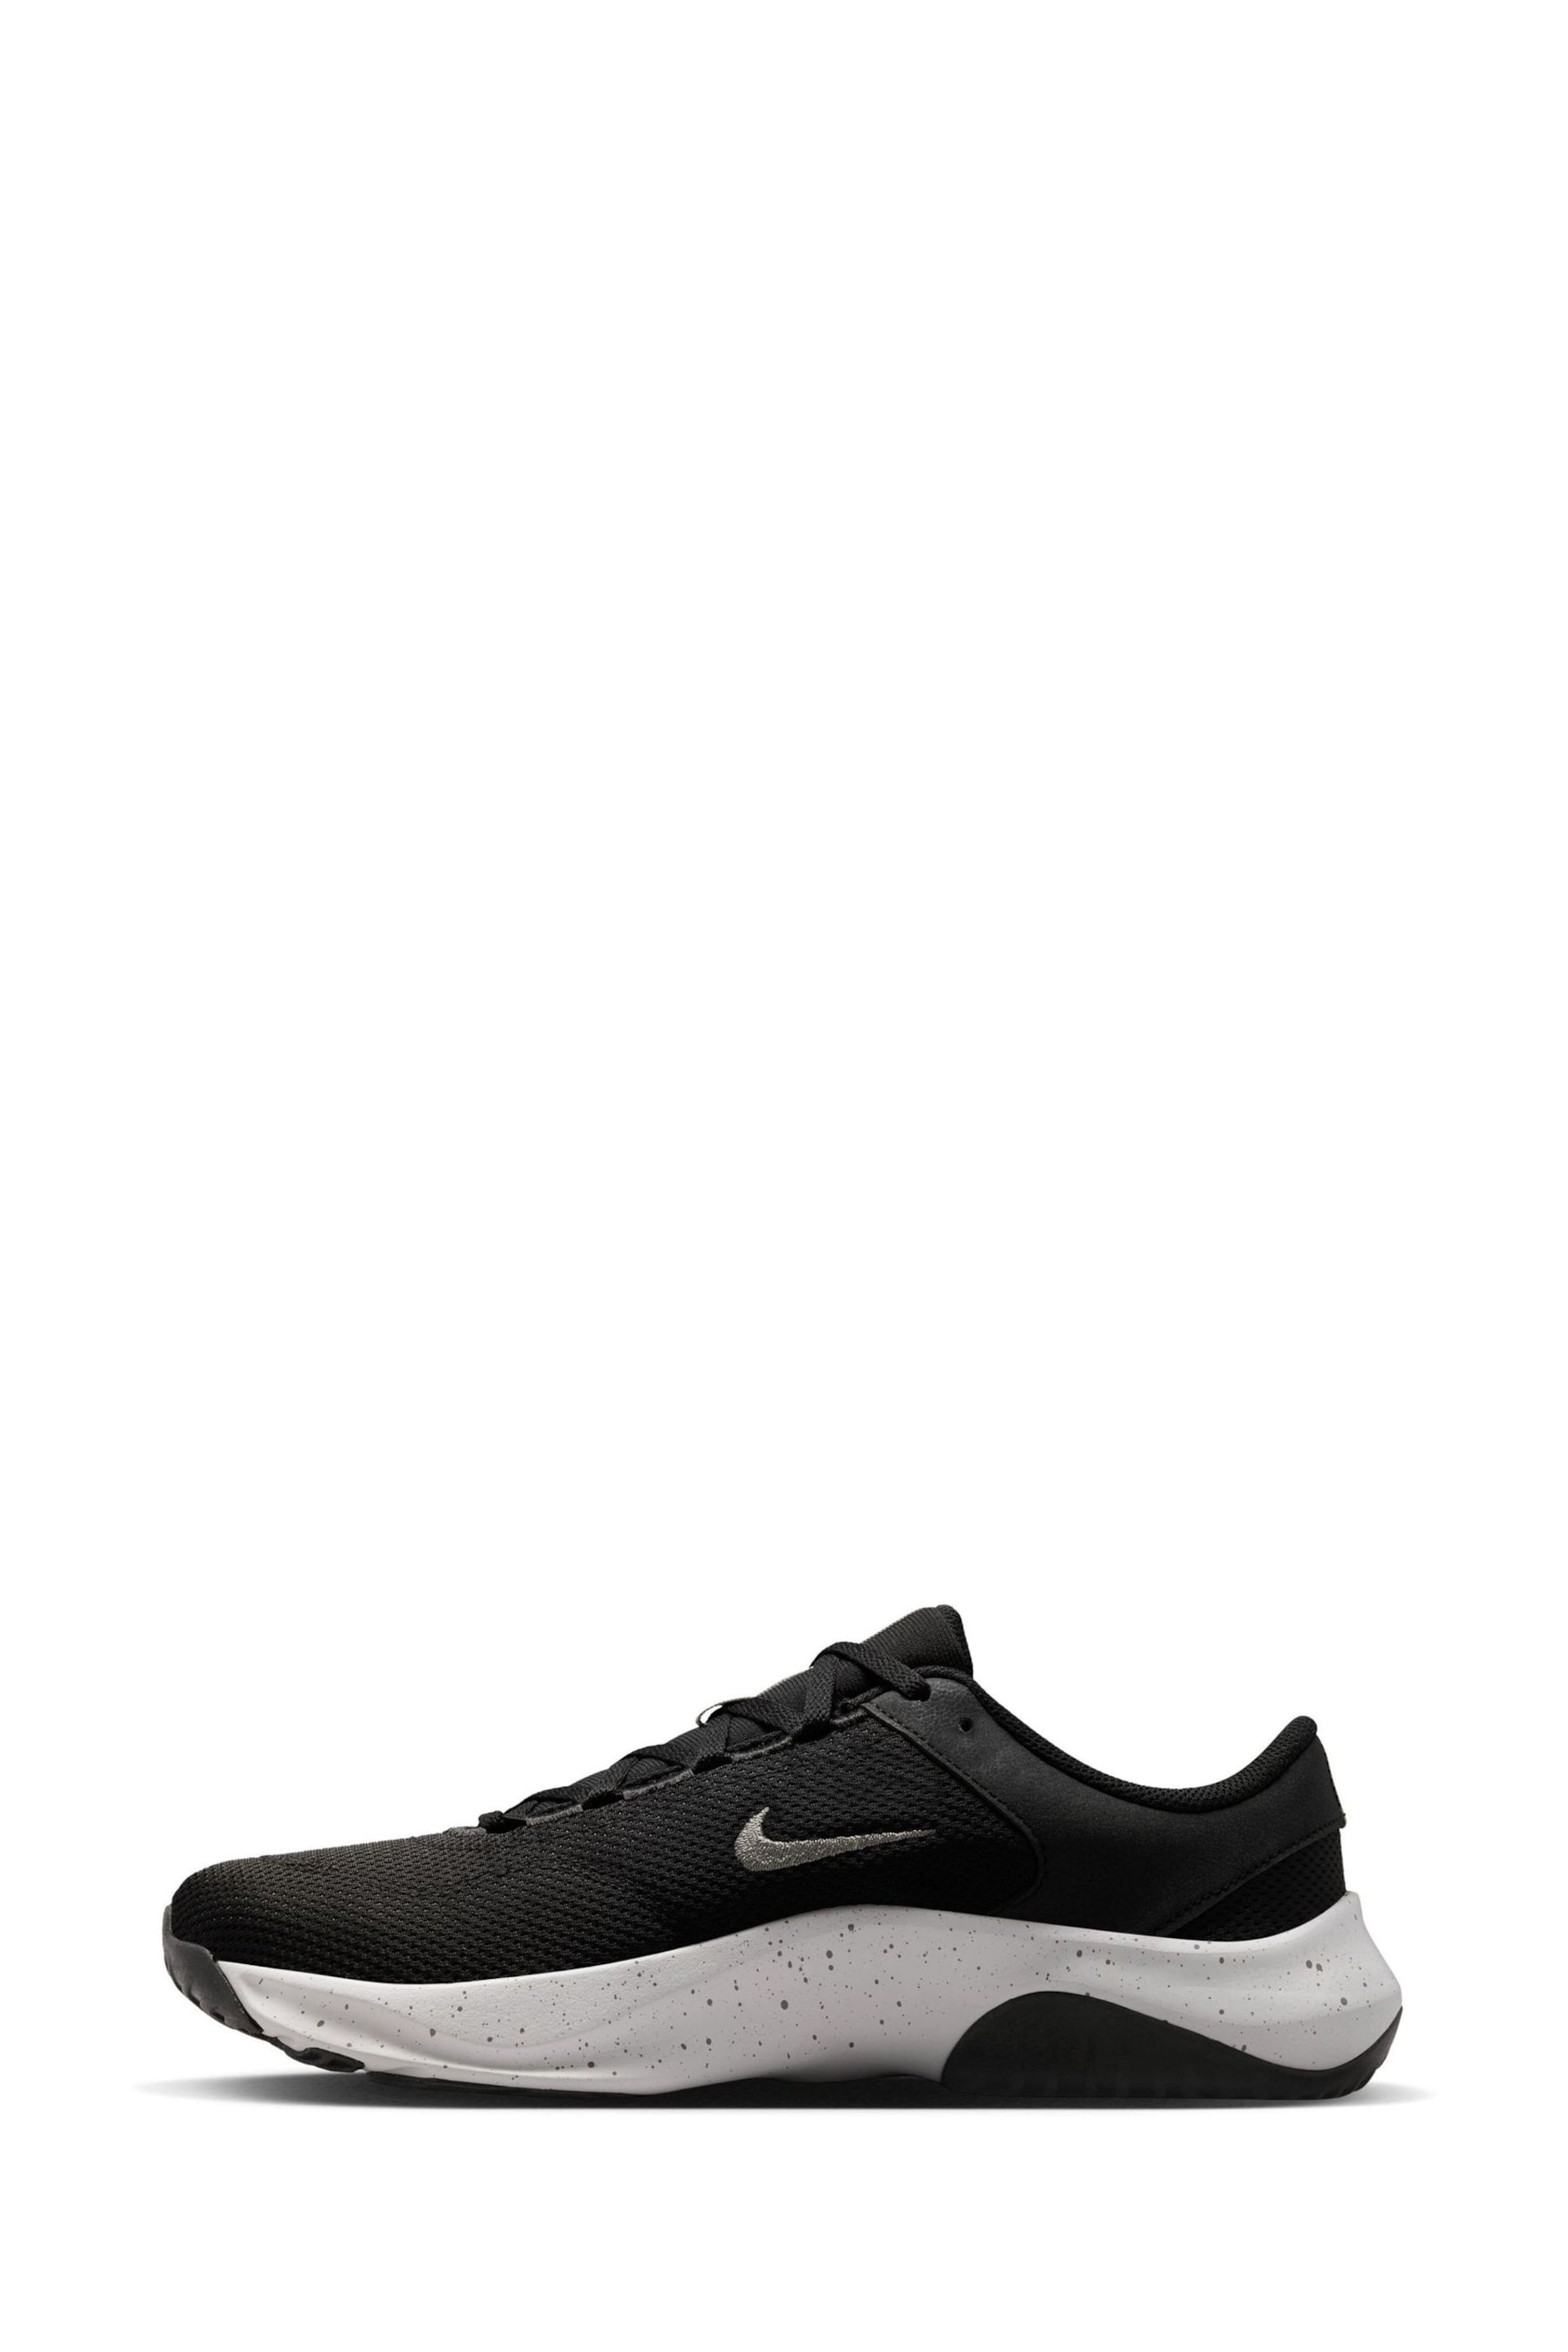 Nike Black/Grey Legend Essential 3 Gym Trainers - Image 4 of 11